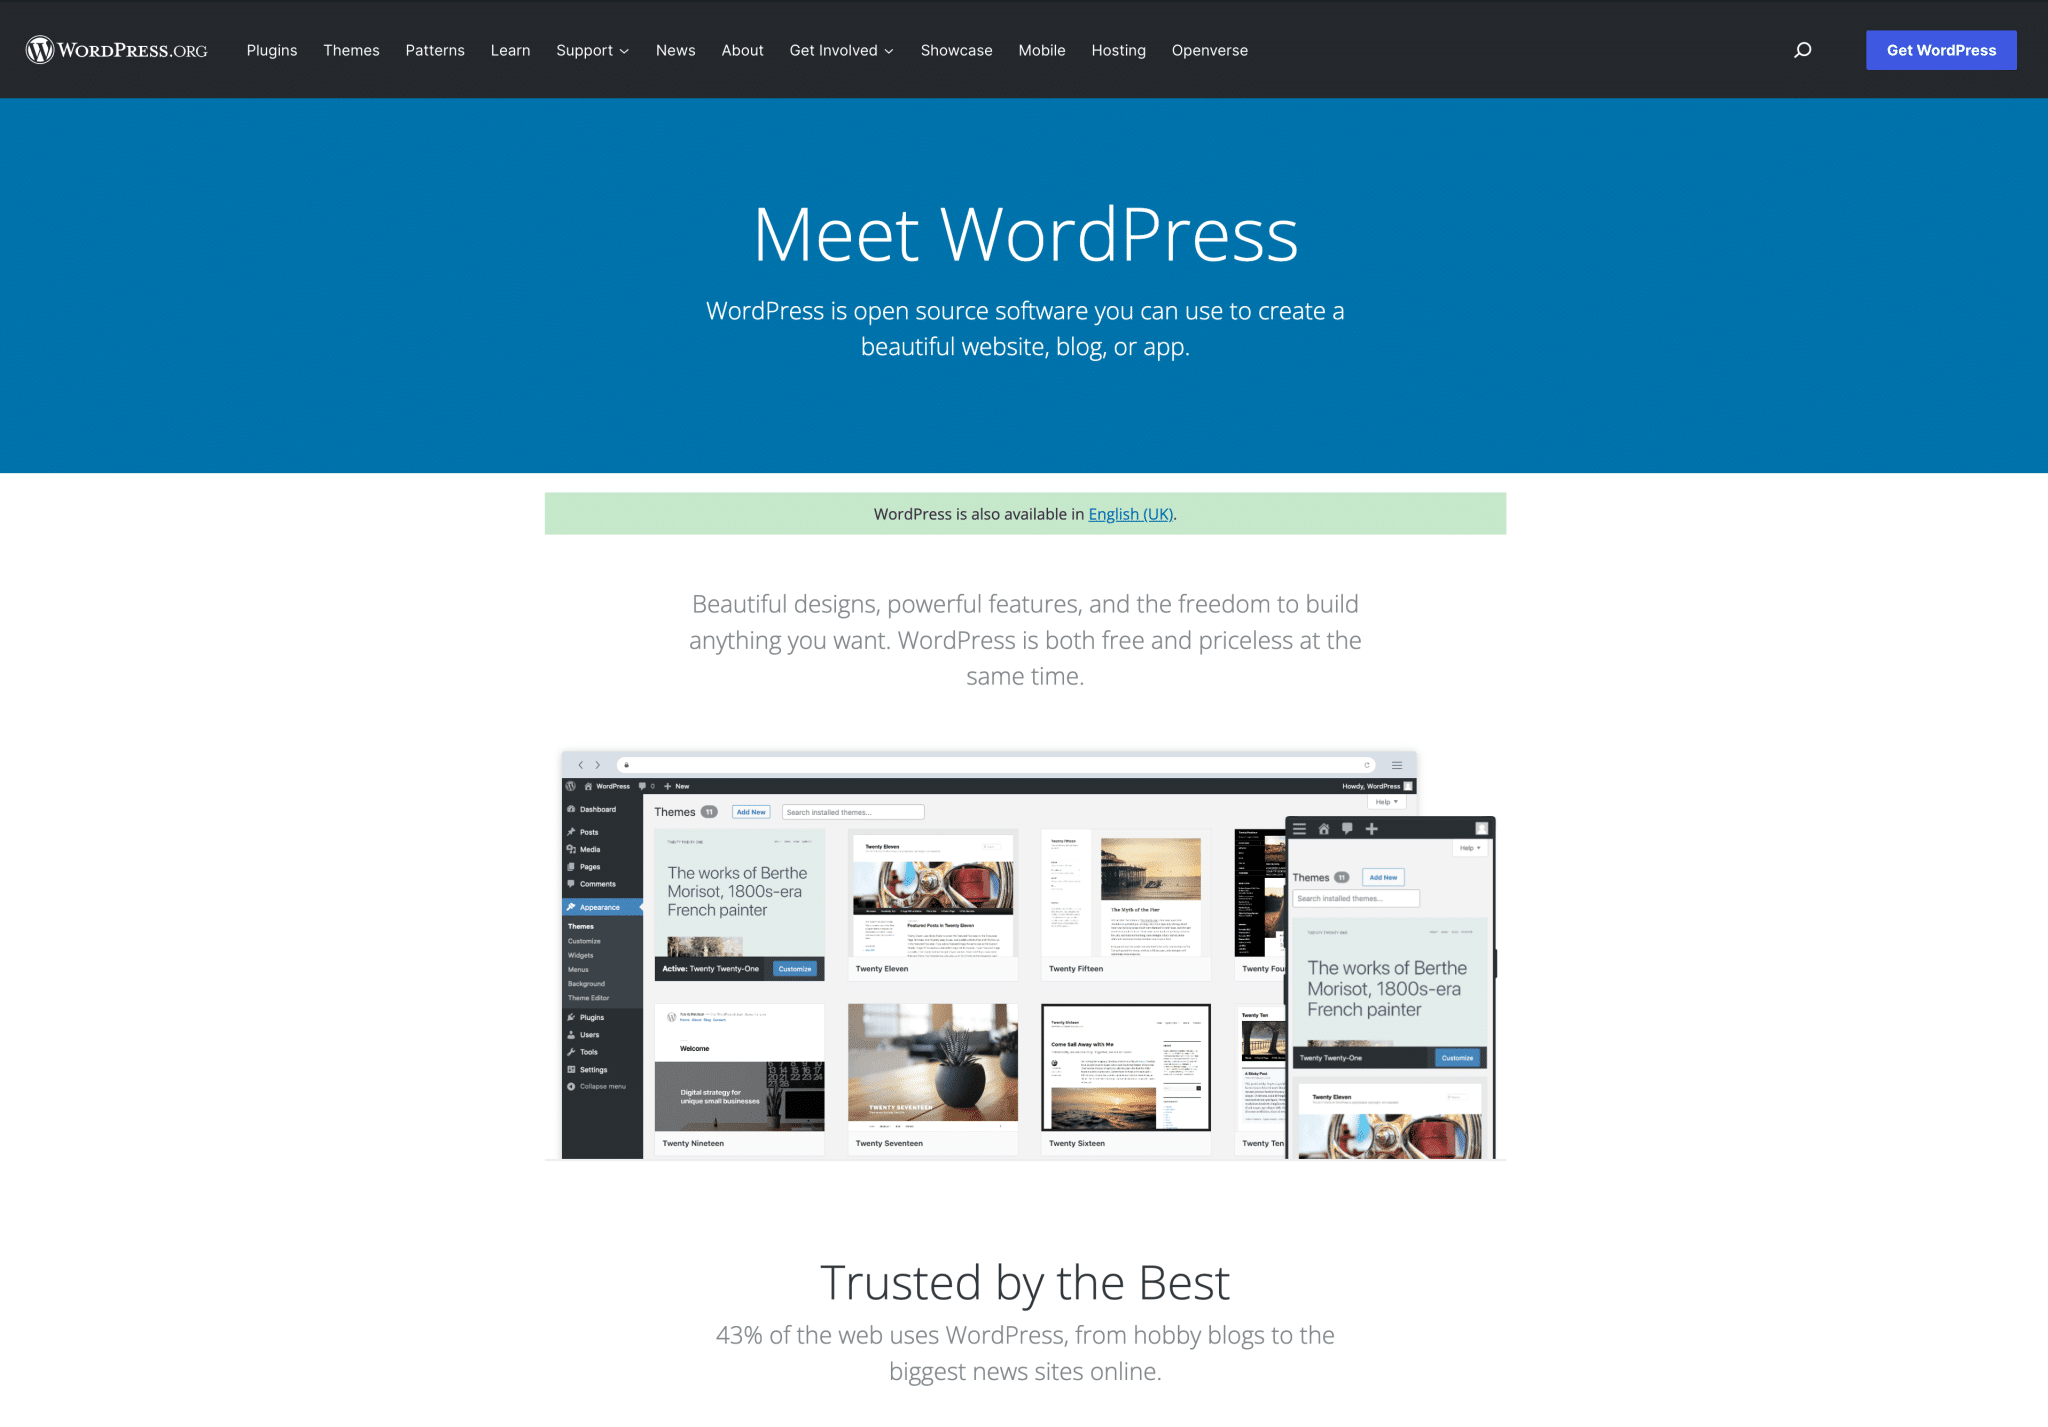 WordPress.org homepage